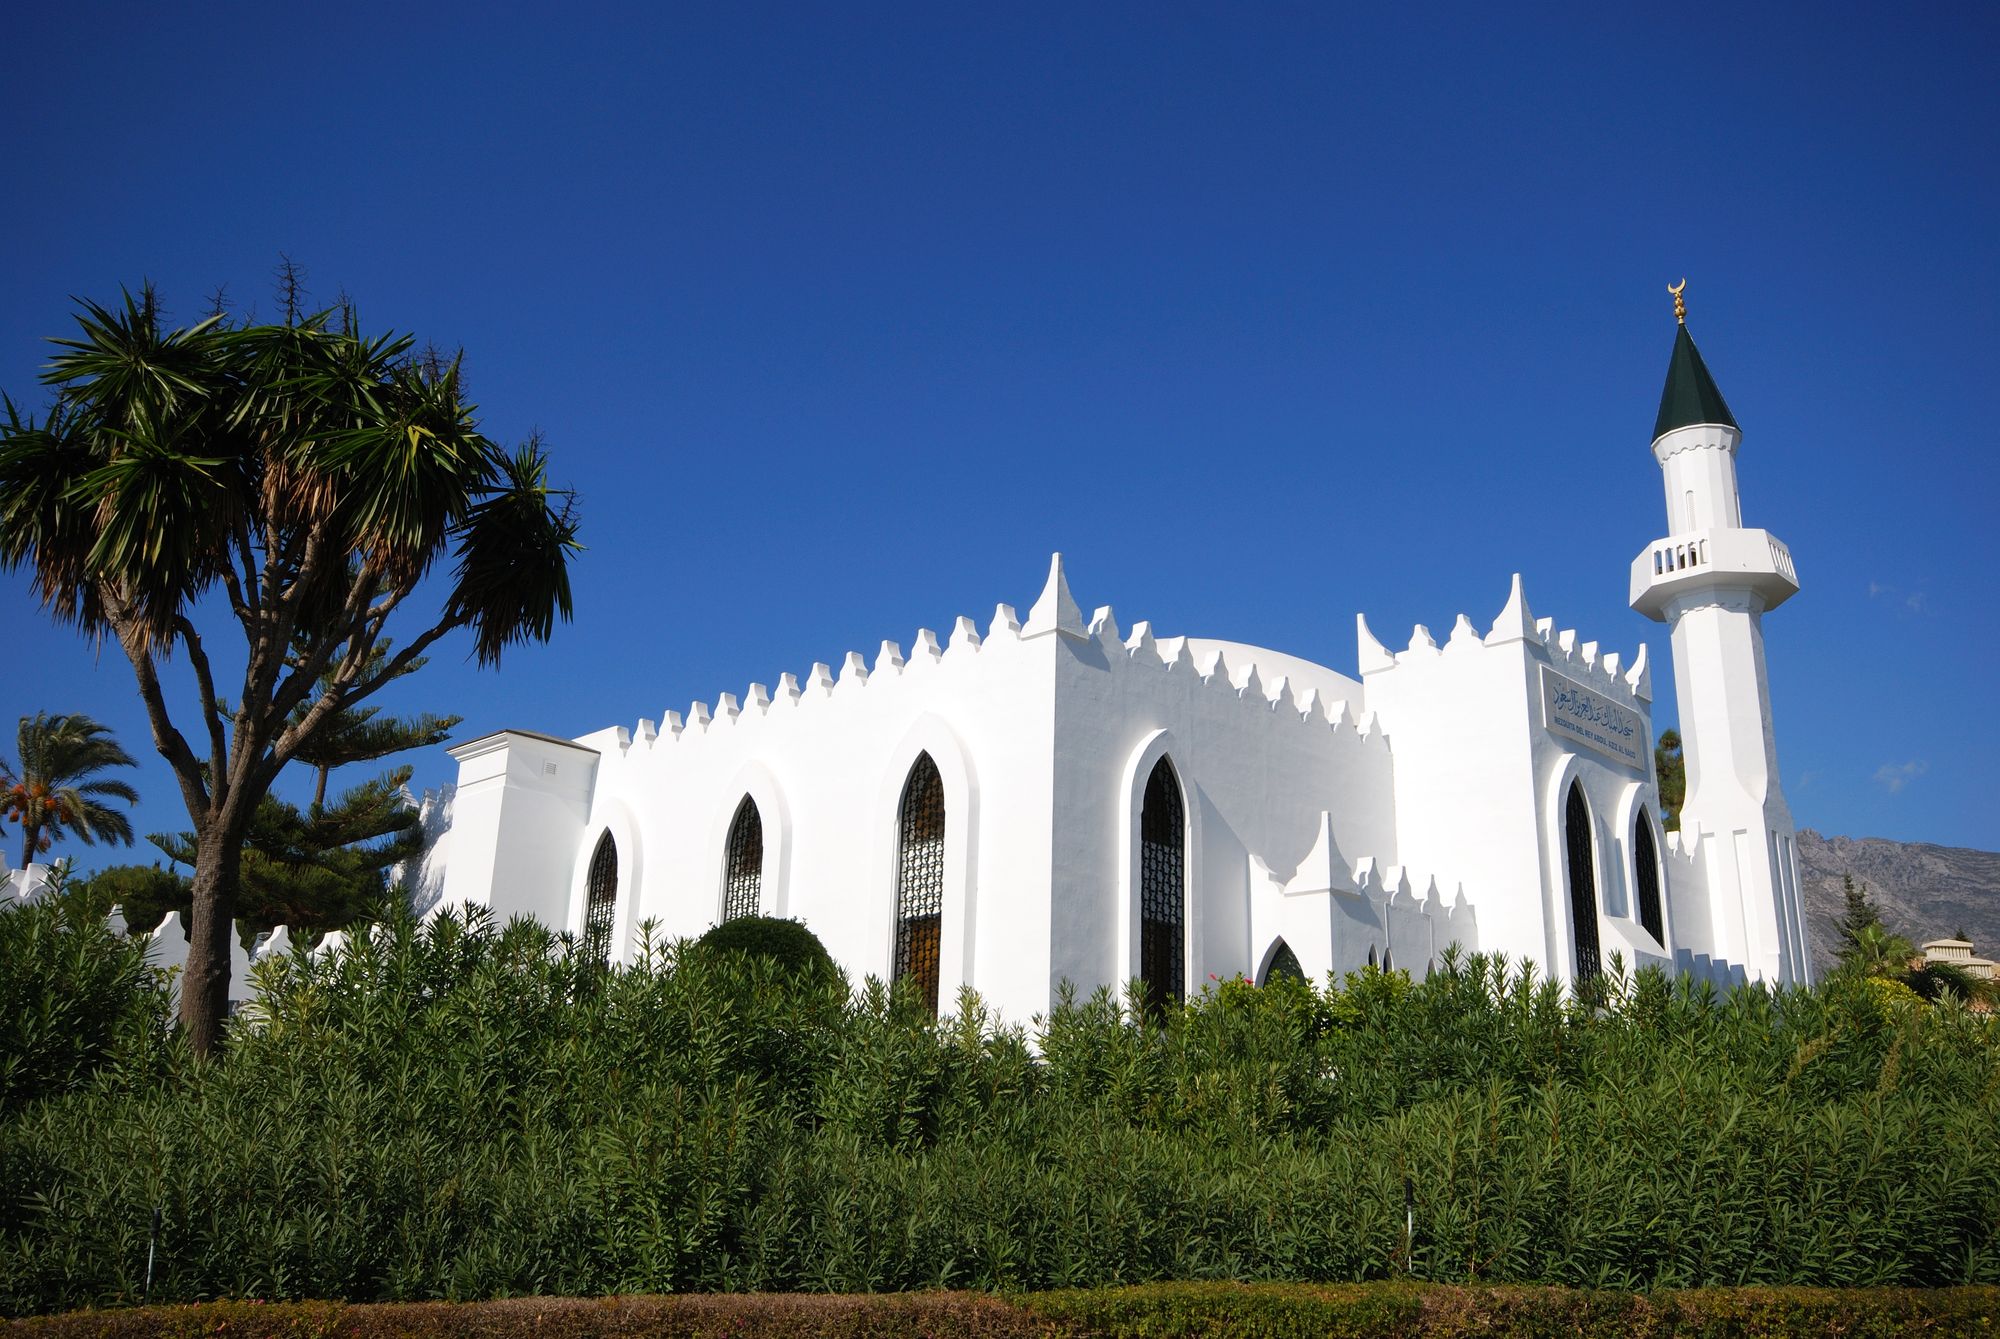 King Abdul Aziz Mosque in Marbella, Malaga